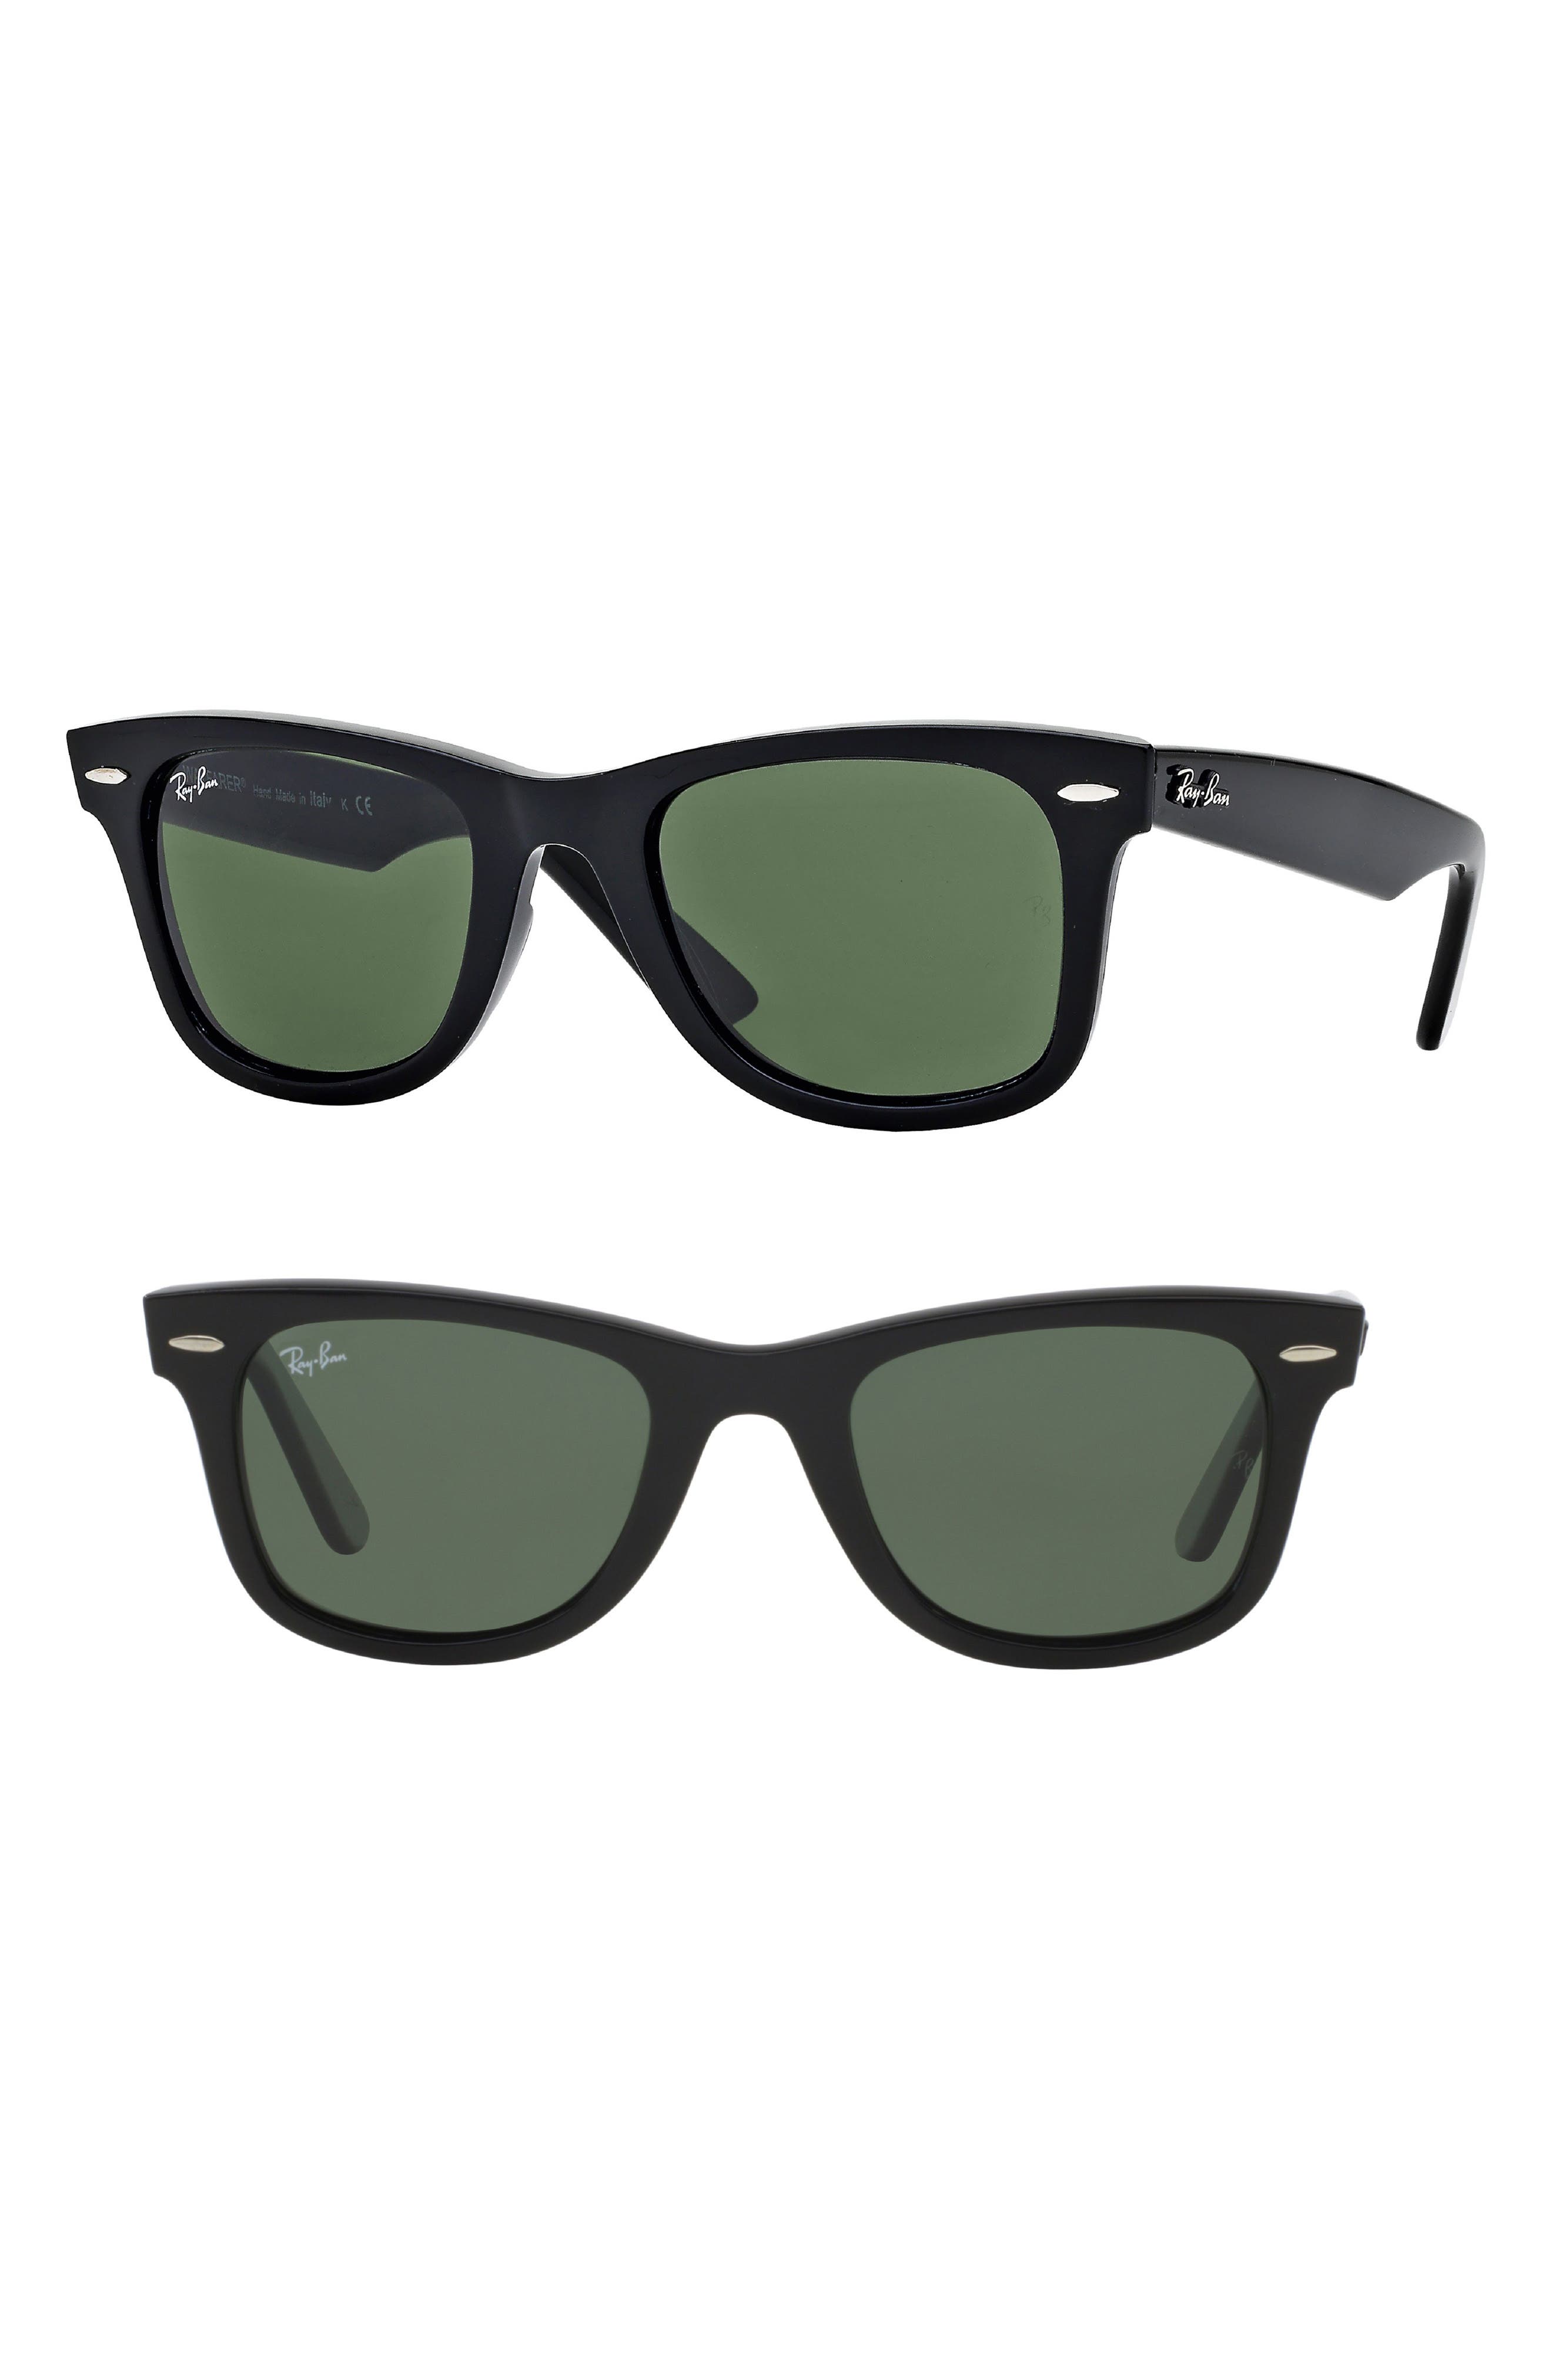 ray ban classic wayfarer xl 54mm sunglasses